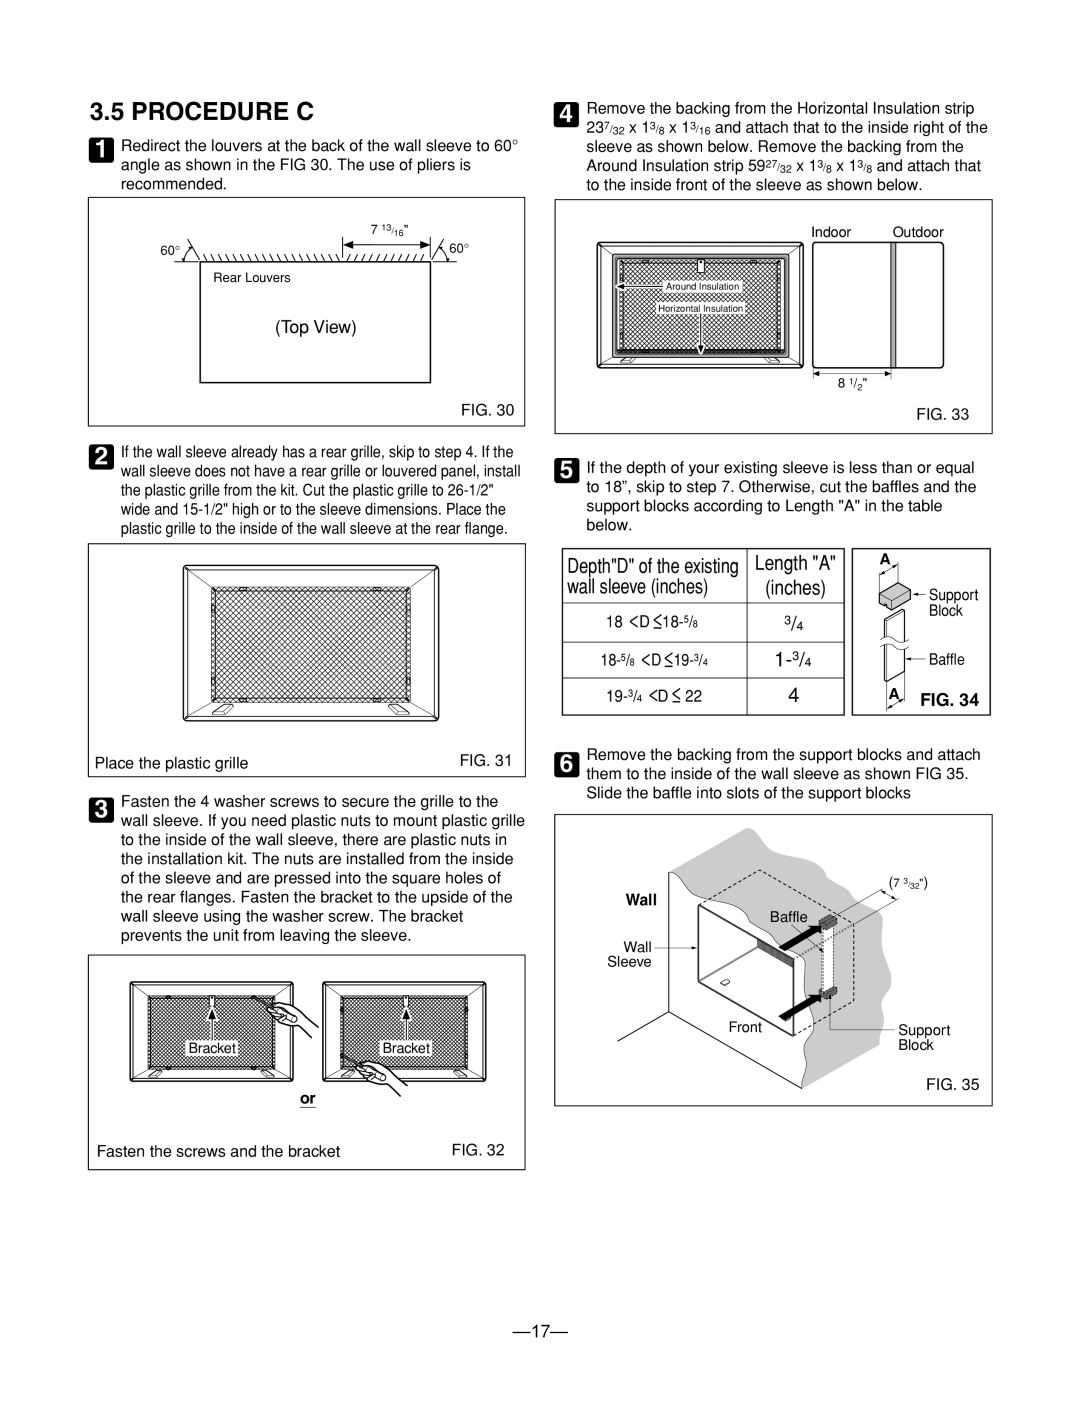 Heat Controller BG-103A service manual Procedure C, Afig, Length A, wall sleeve inches, 1-3/4, Wall 